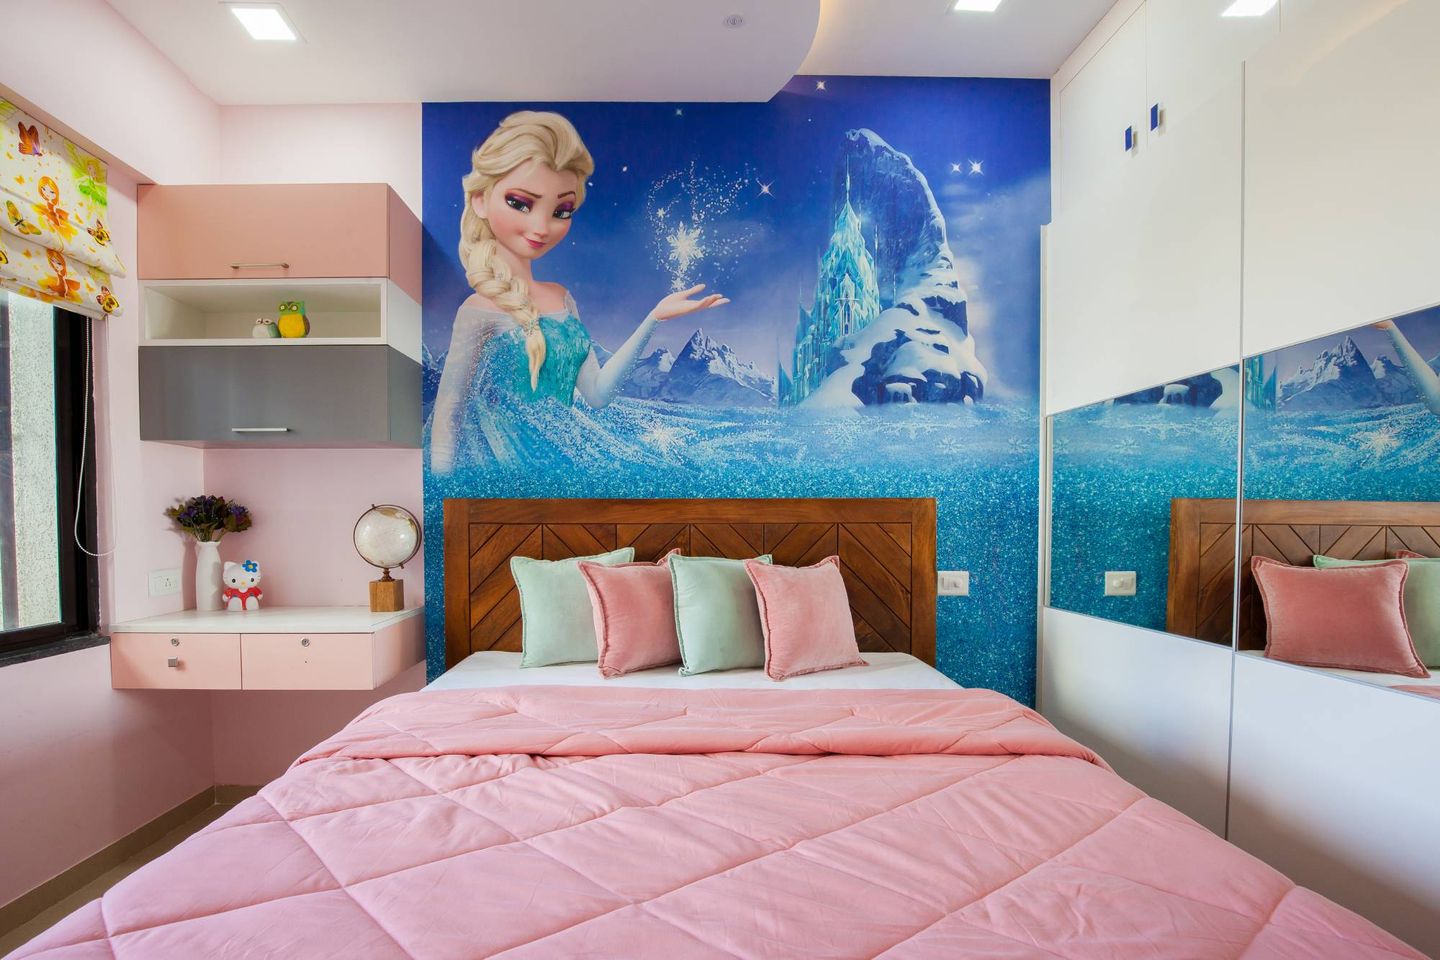 Kid's Room With Frozen-Themed Wallpaper - Livspace